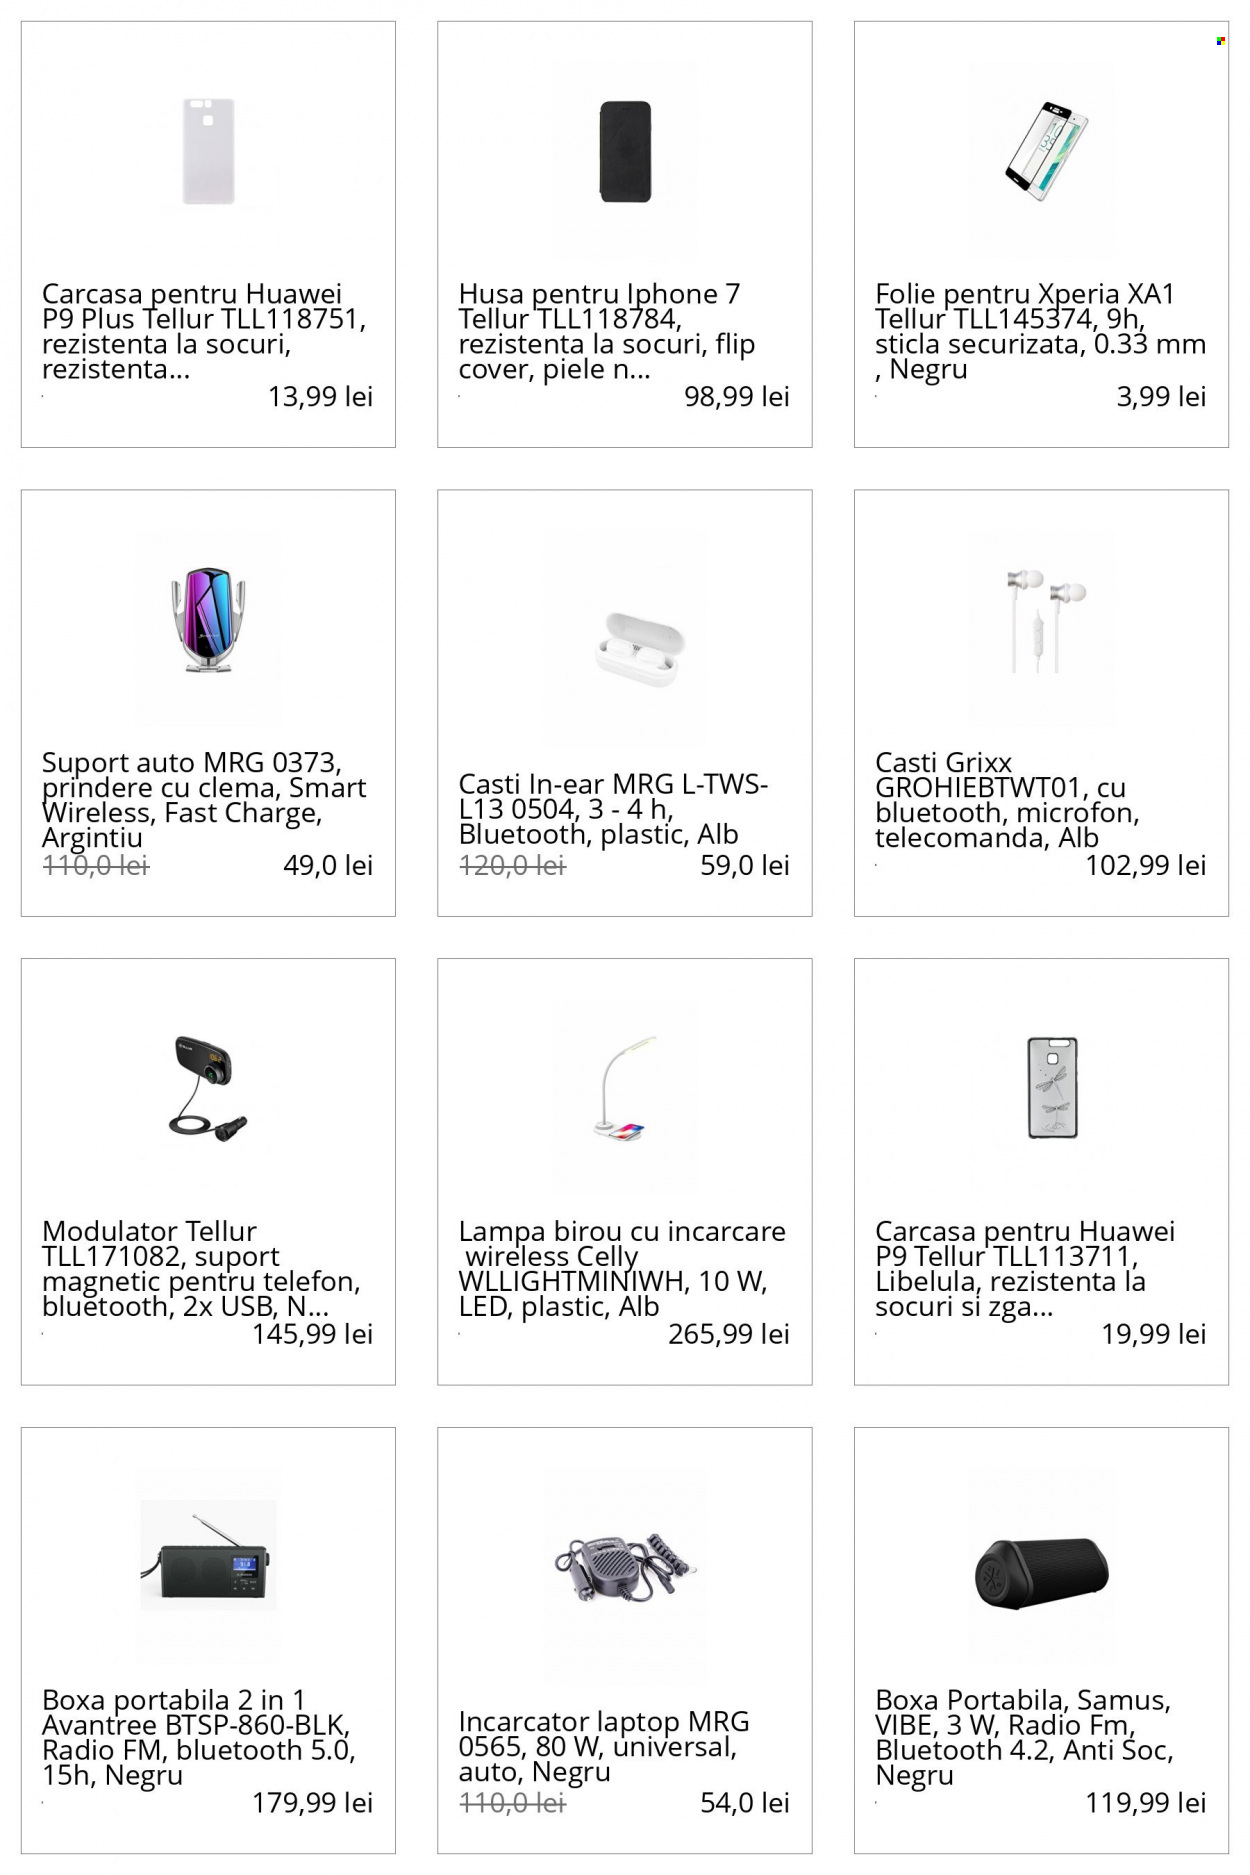 thumbnail - Cataloage elefant.ro - Produse în vânzare - Huawei, telefon, iPhone, iPhone 7, laptop, boxa, boxa portabila, căşti, incarcator. Pagina 12.